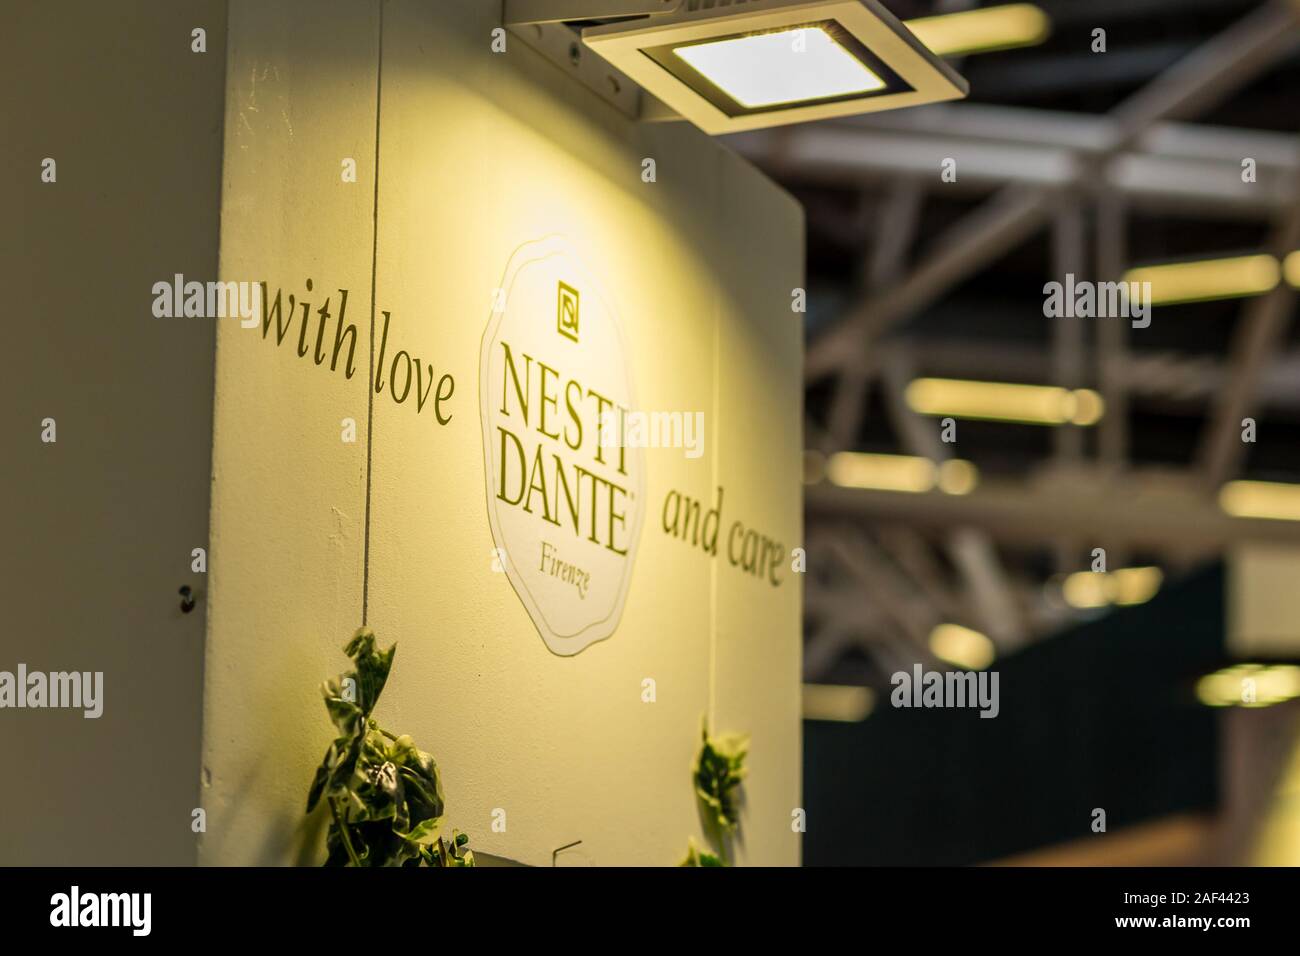 Nesti dante hi-res stock and images - Alamy